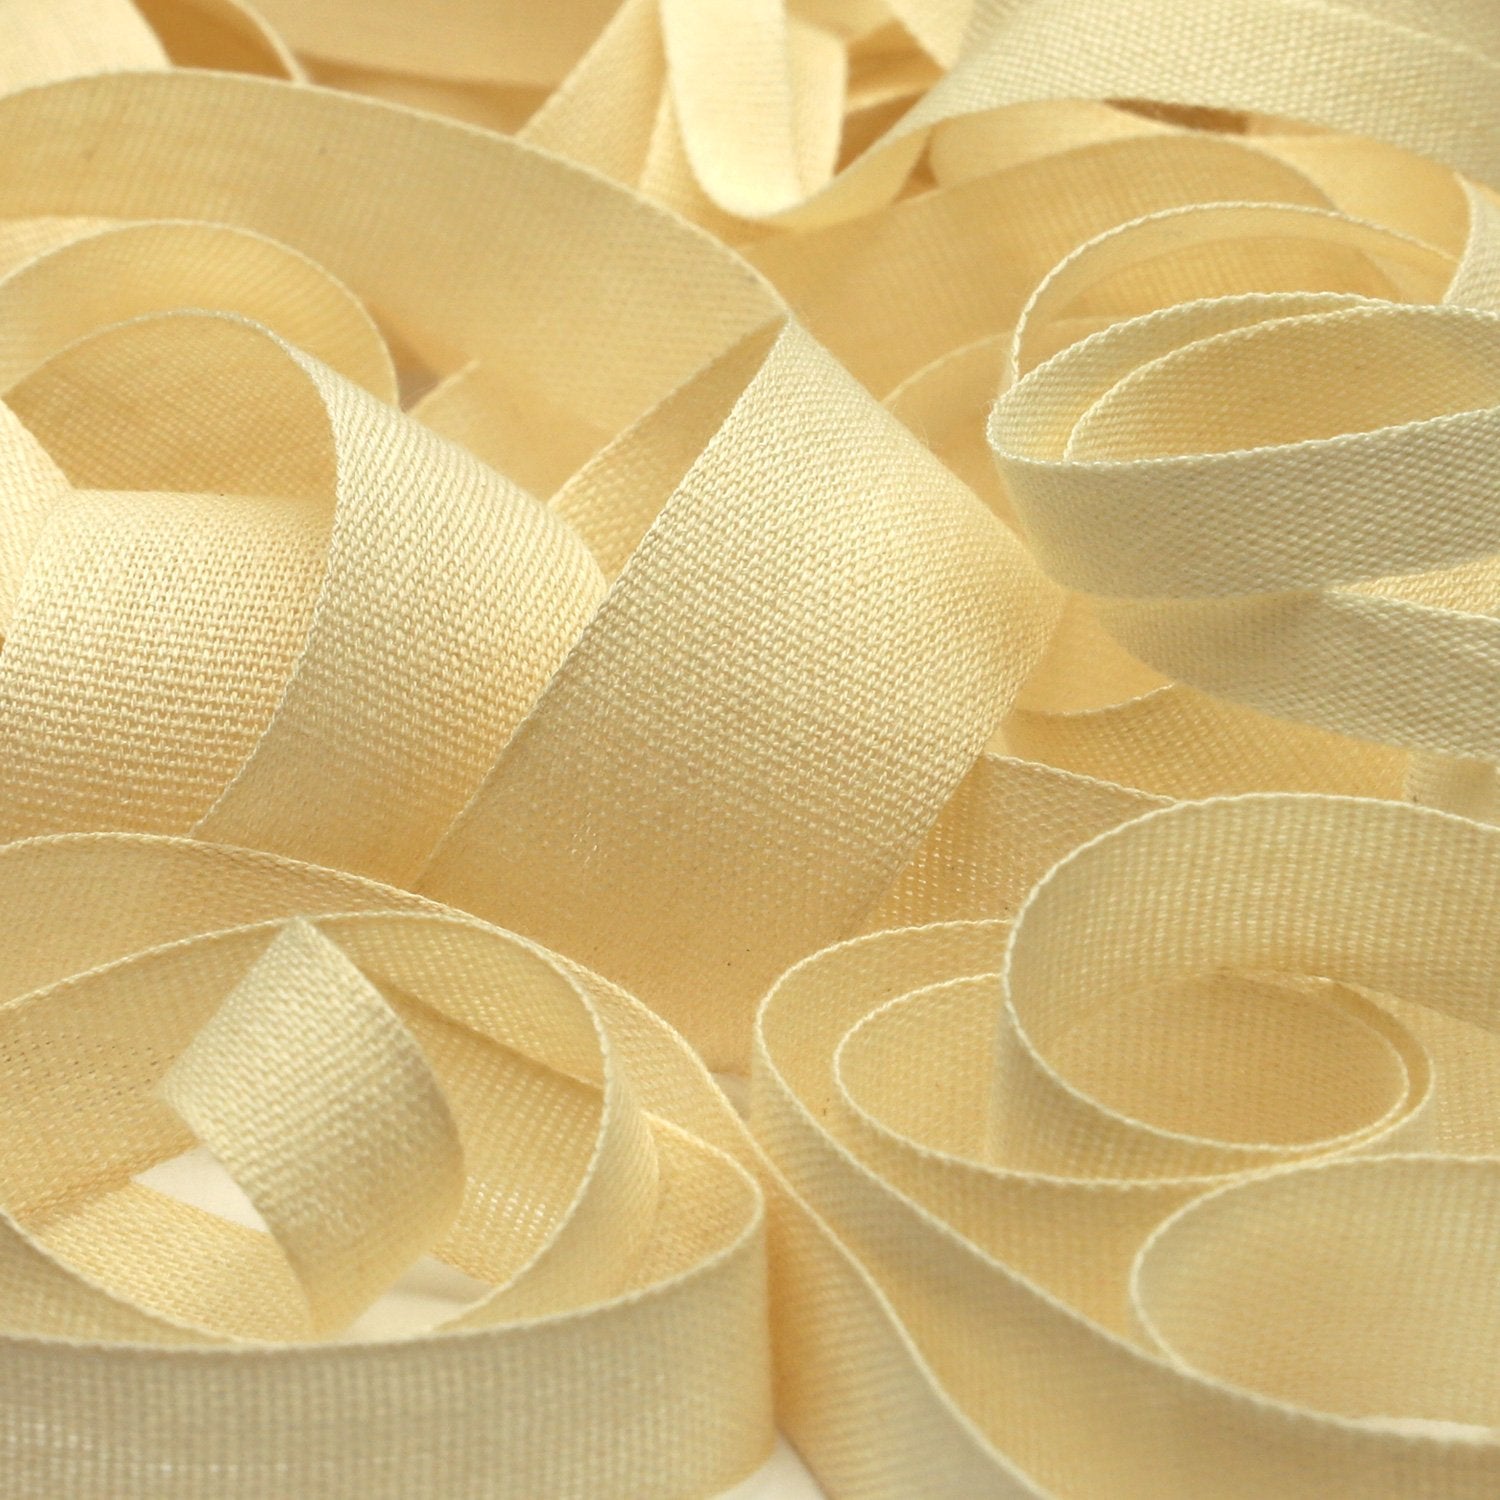 FUJIYAMA RIBBON Organic Cotton Taffeta Ribbon 18mm Ecru 9.14 Meters Roll